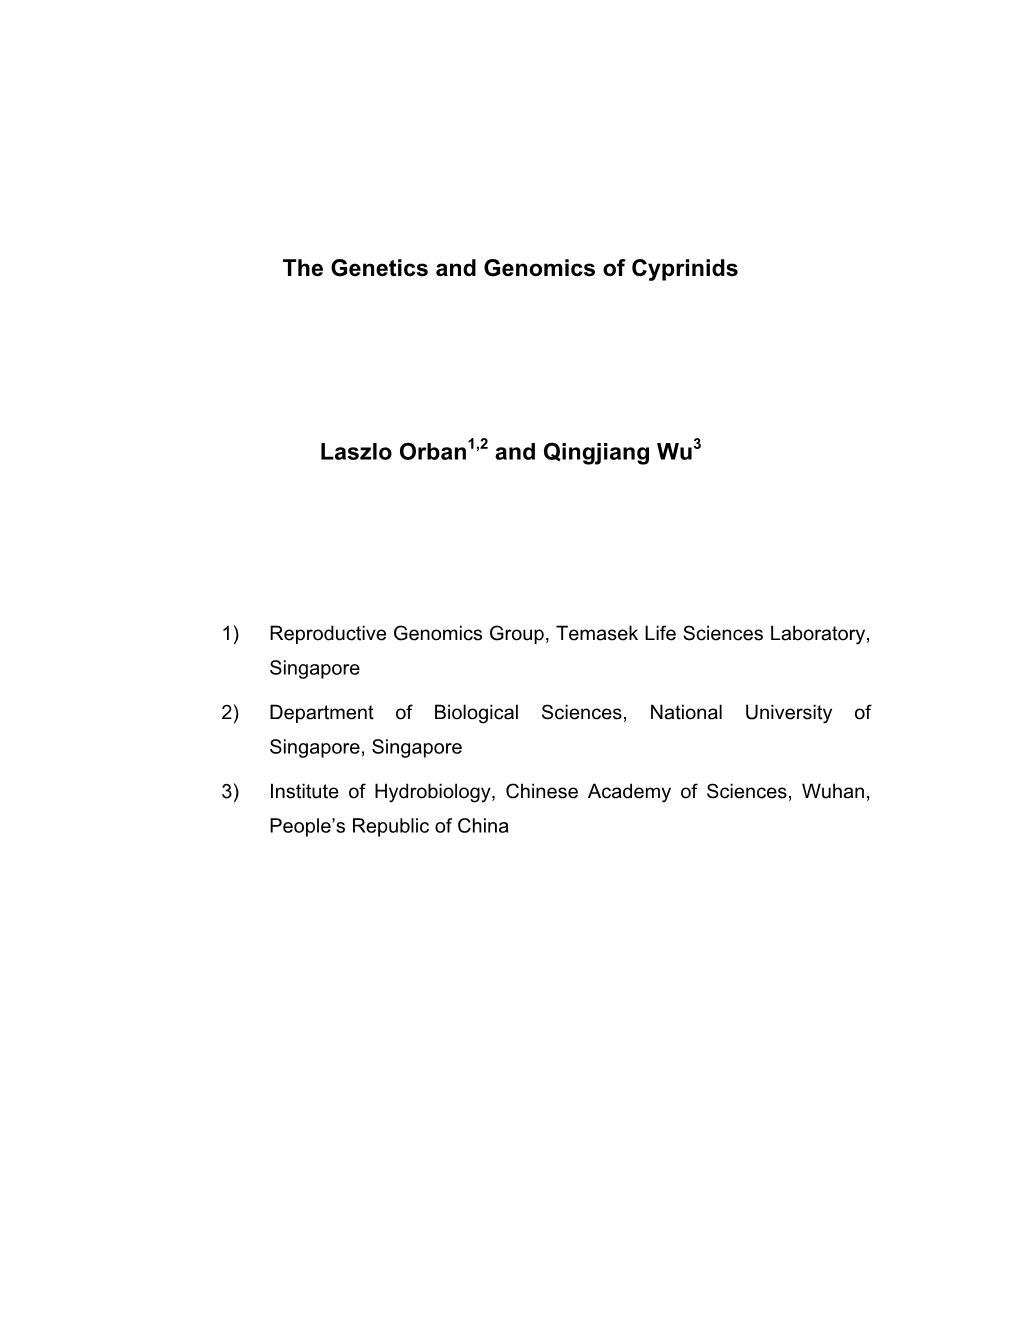 The Genetics and Genomics of Cyprinids Laszlo Orban1,2 And